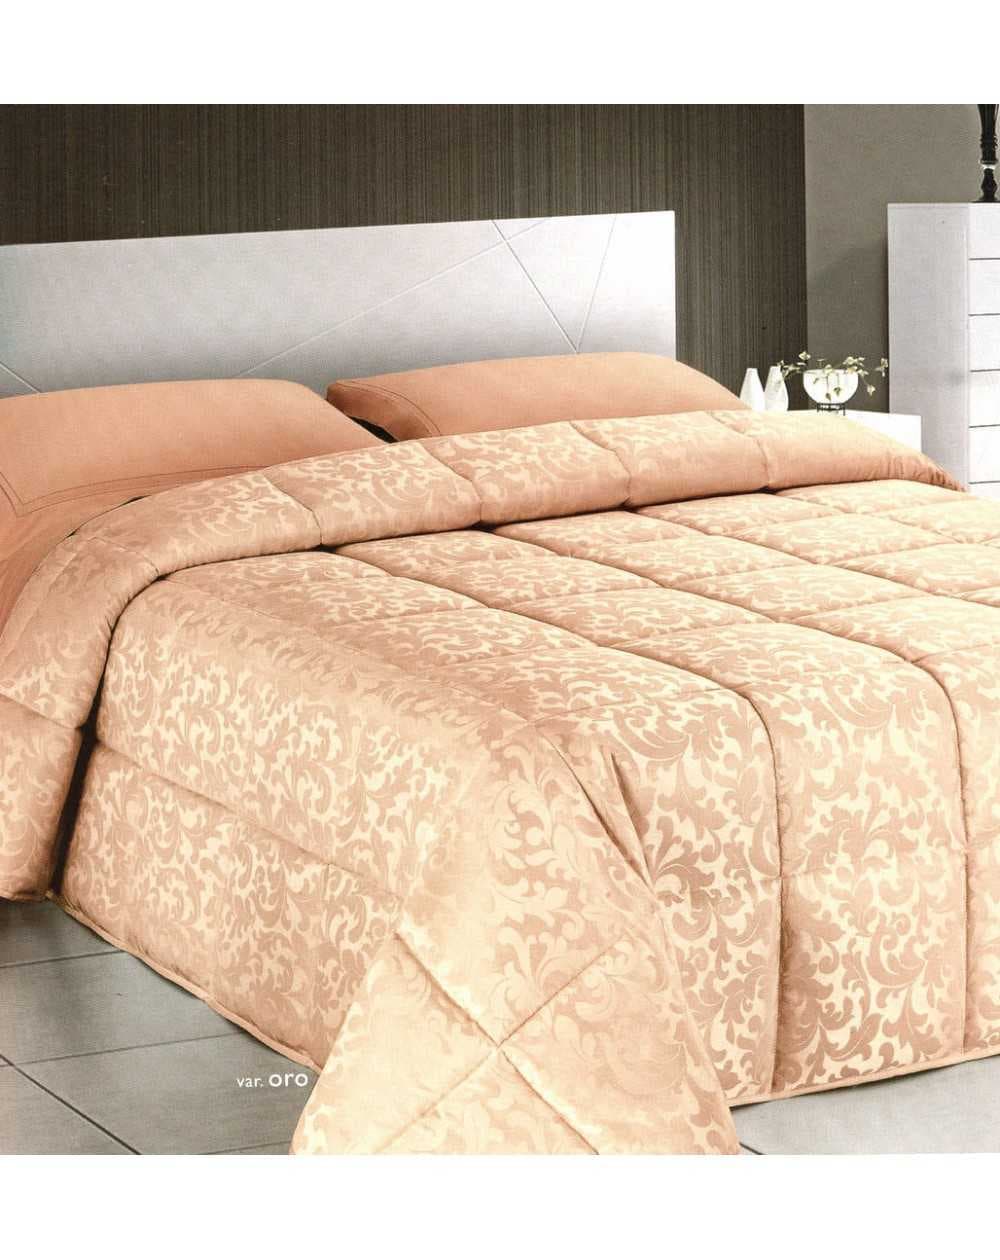 Comforter Fedora Pink GF Ferrari cloth Jacquard fabric